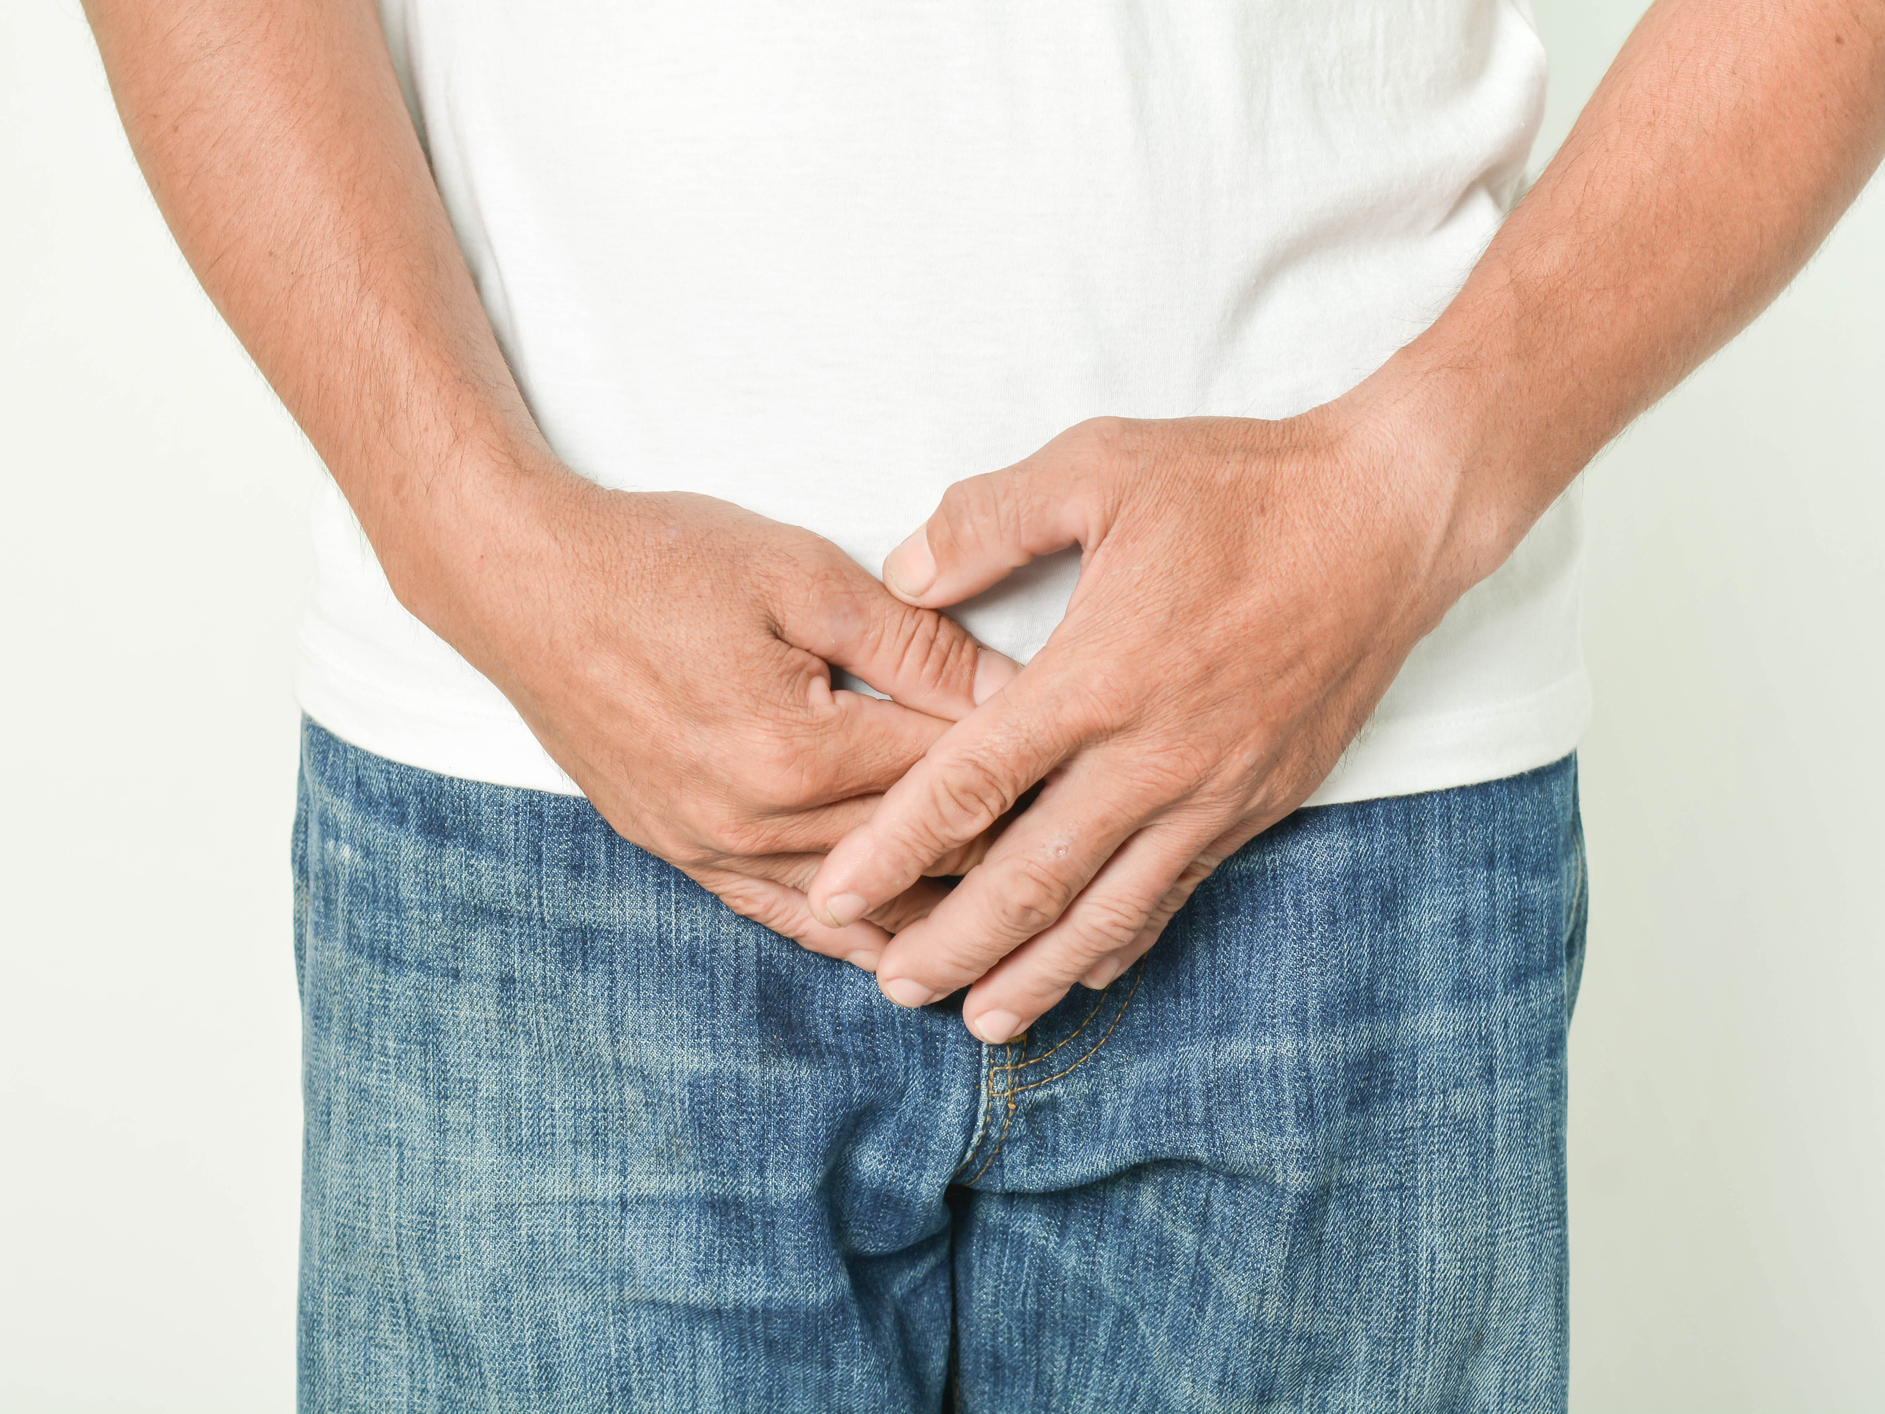 The new diabetes drug causing genital gangrene